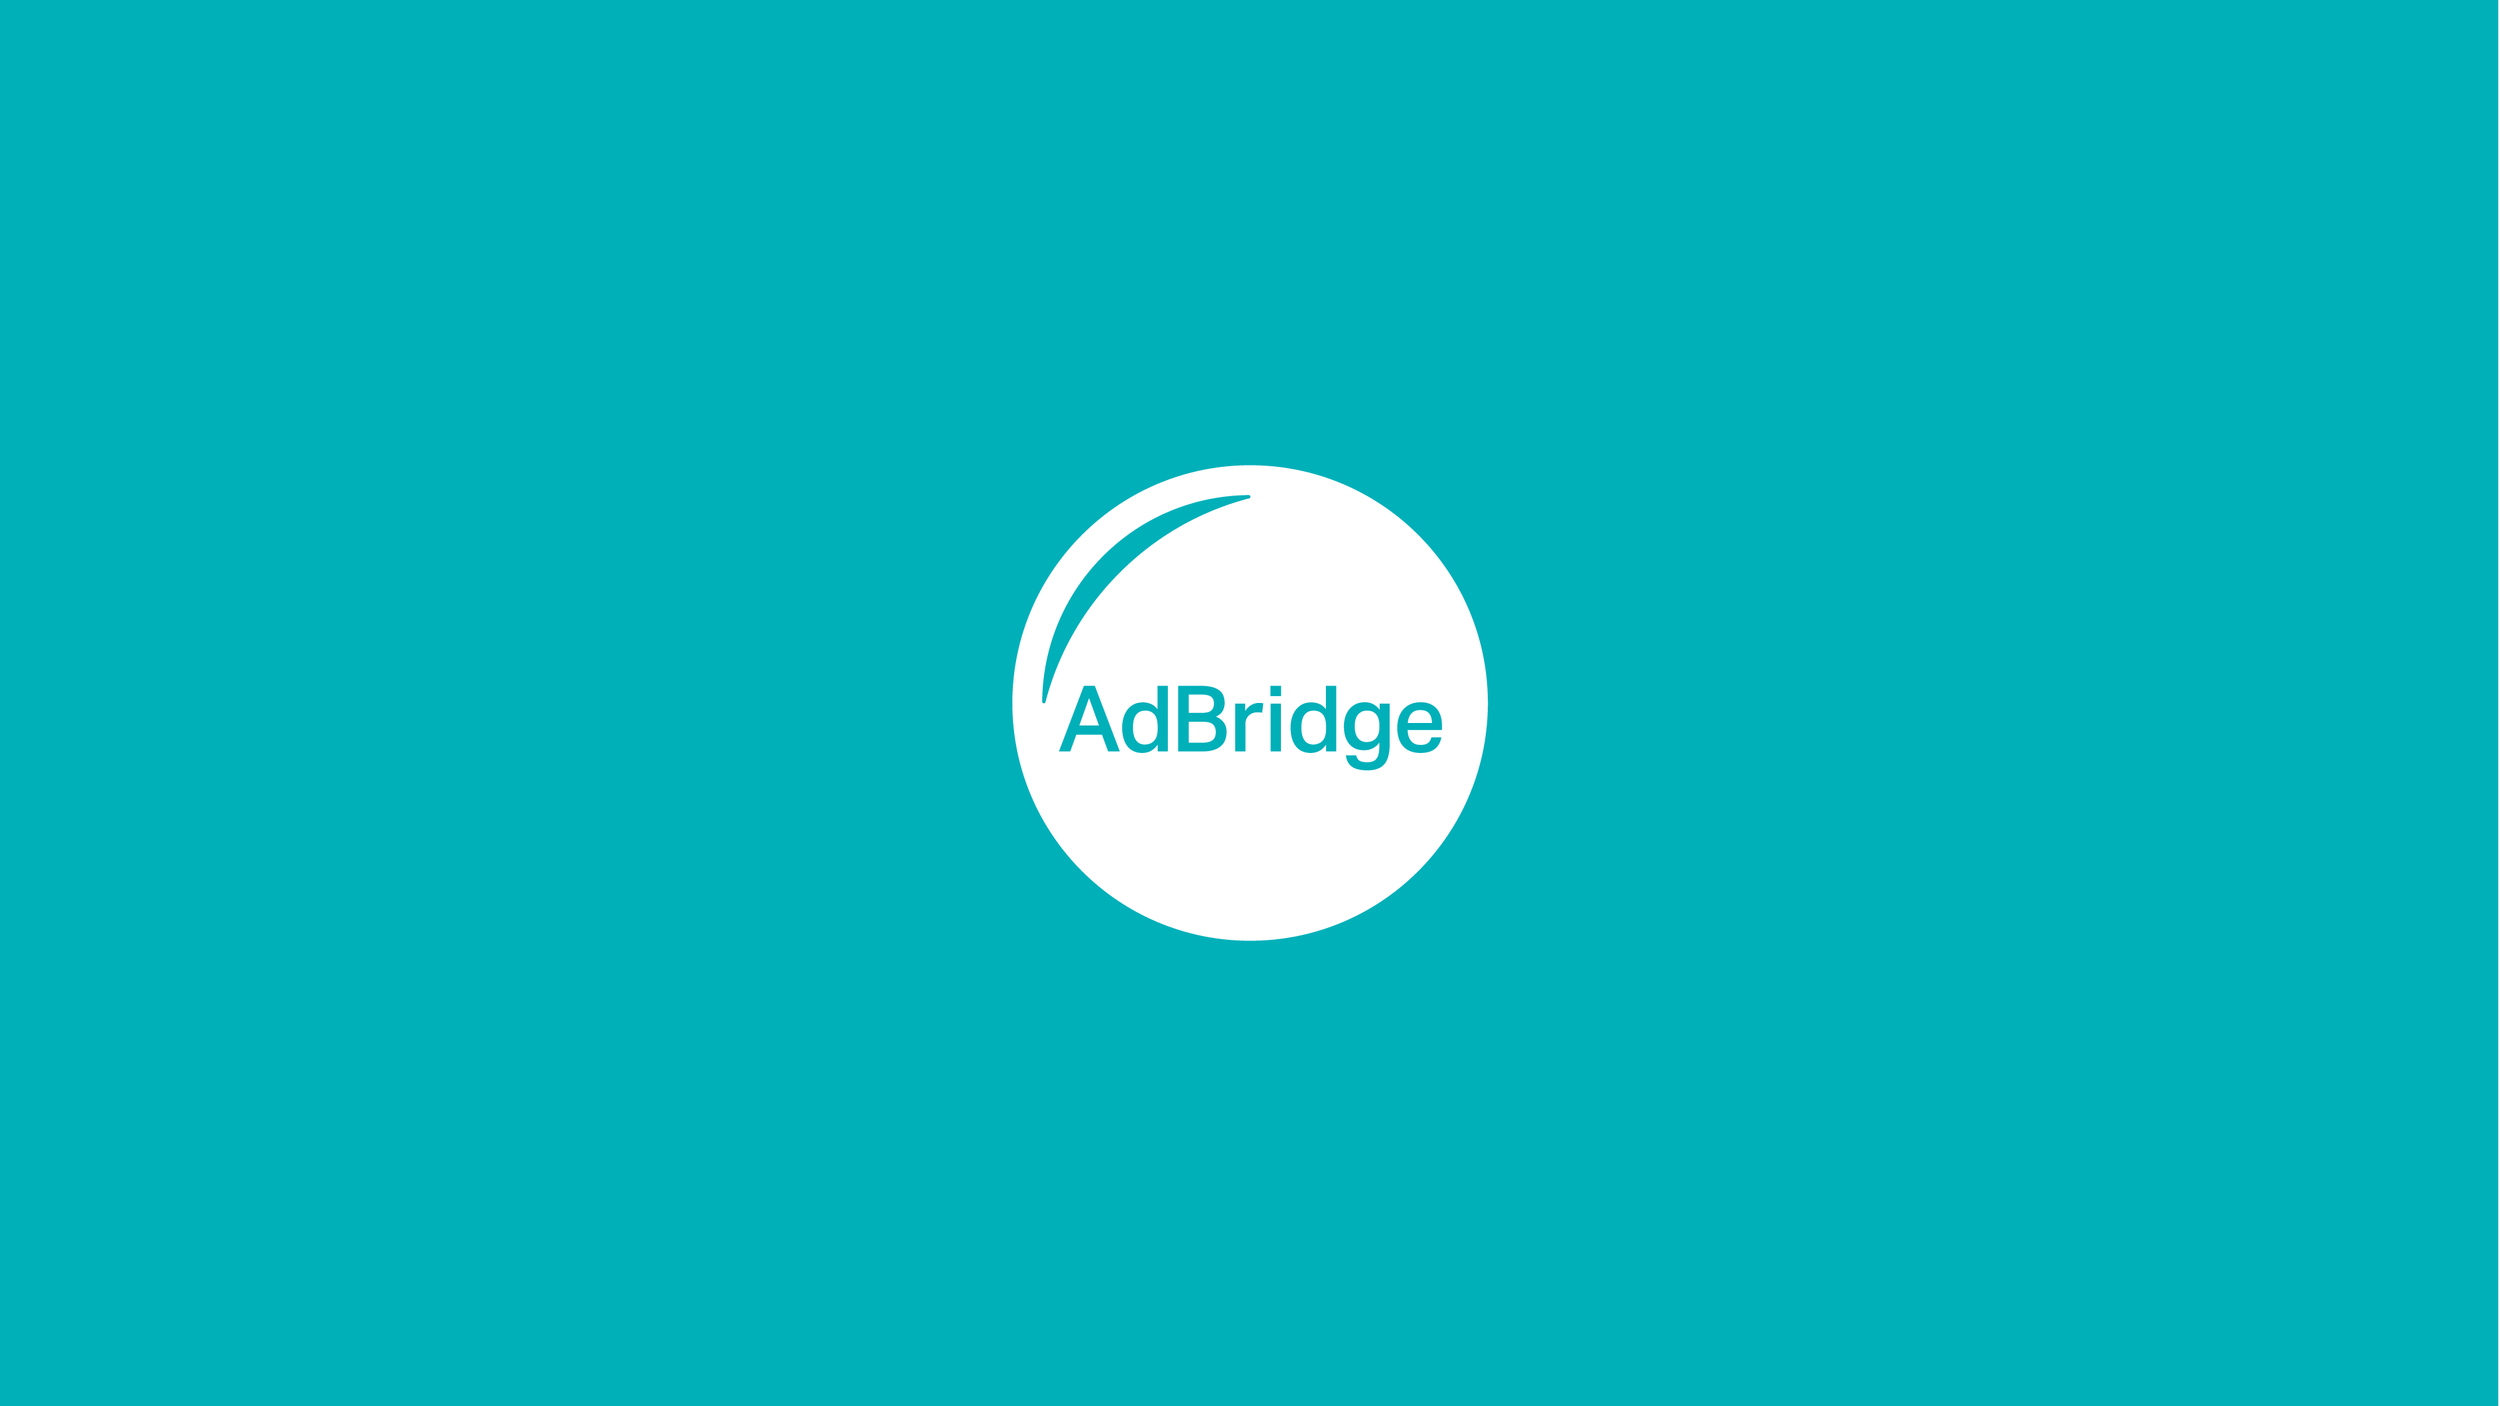 adbridge_art-boards_2-01.png